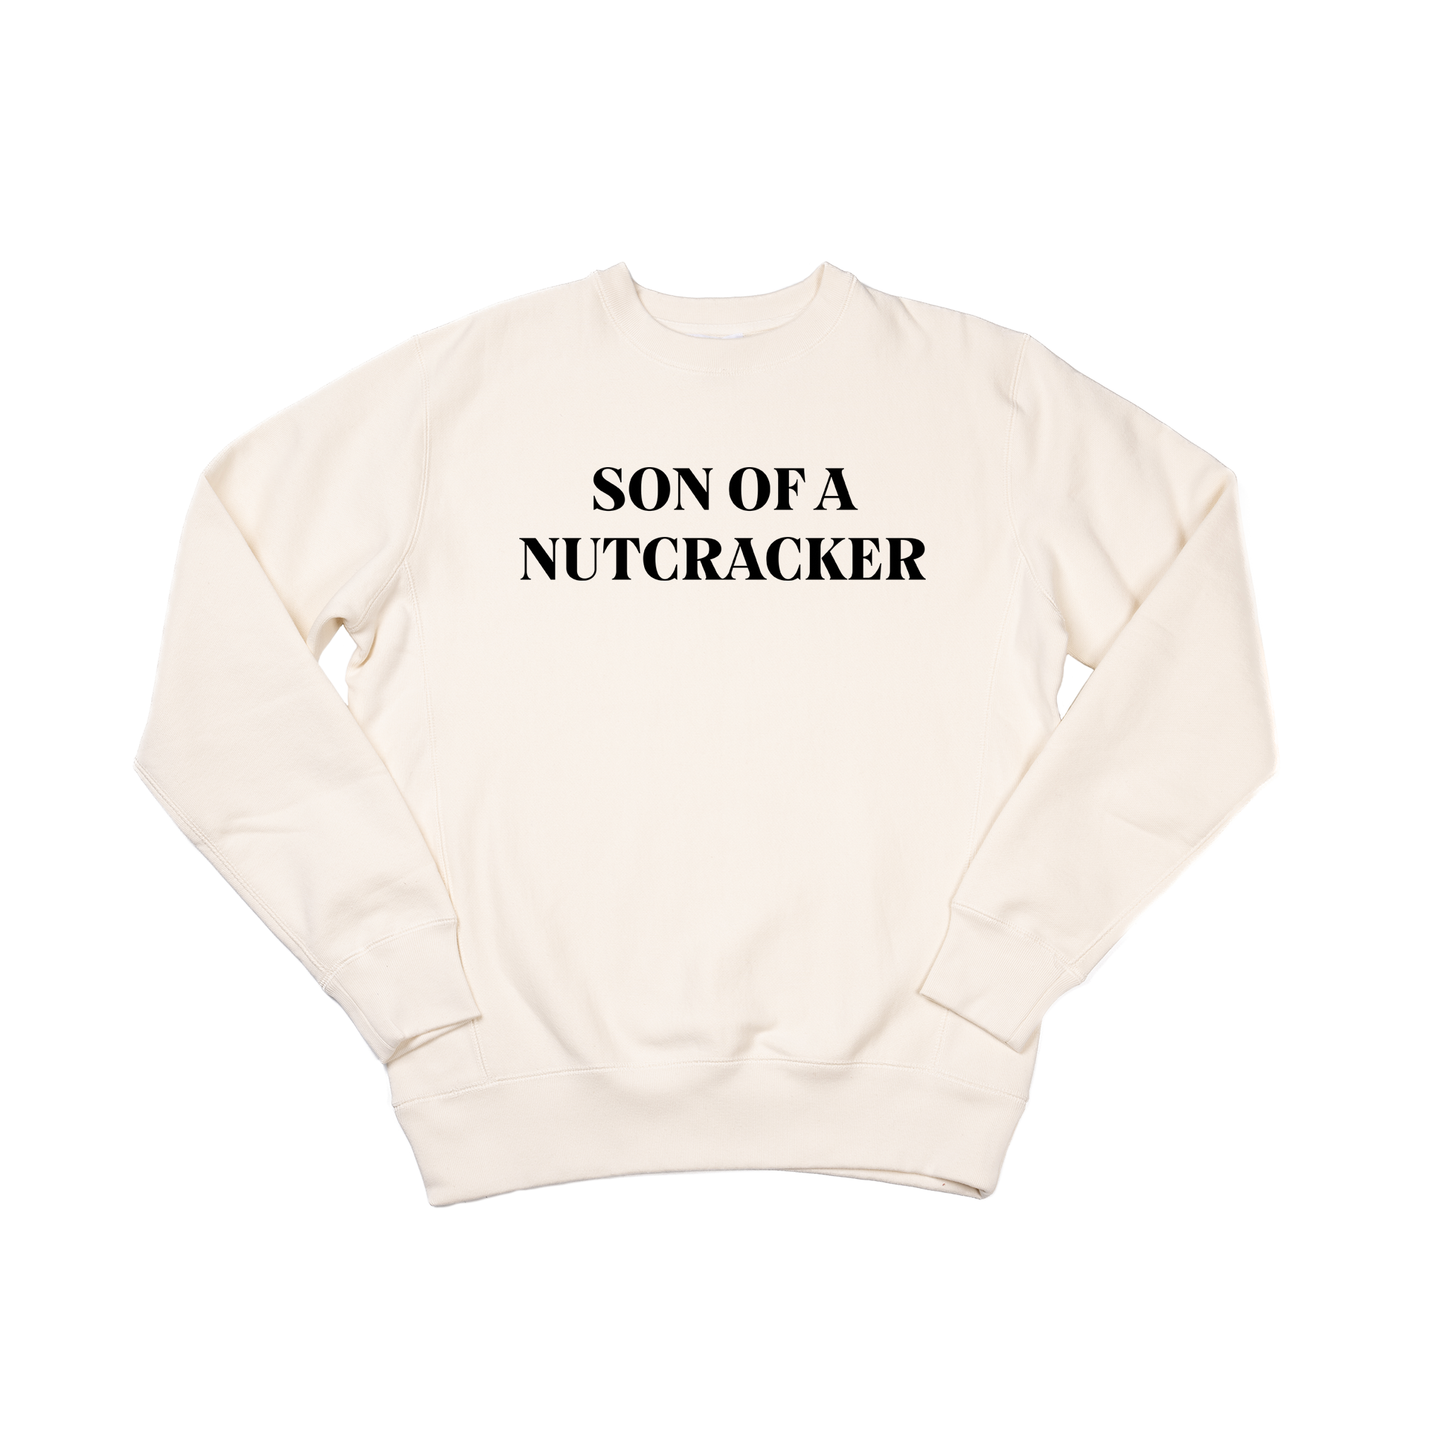 Son of a Nutcracker (Black) - Heavyweight Sweatshirt (Natural)